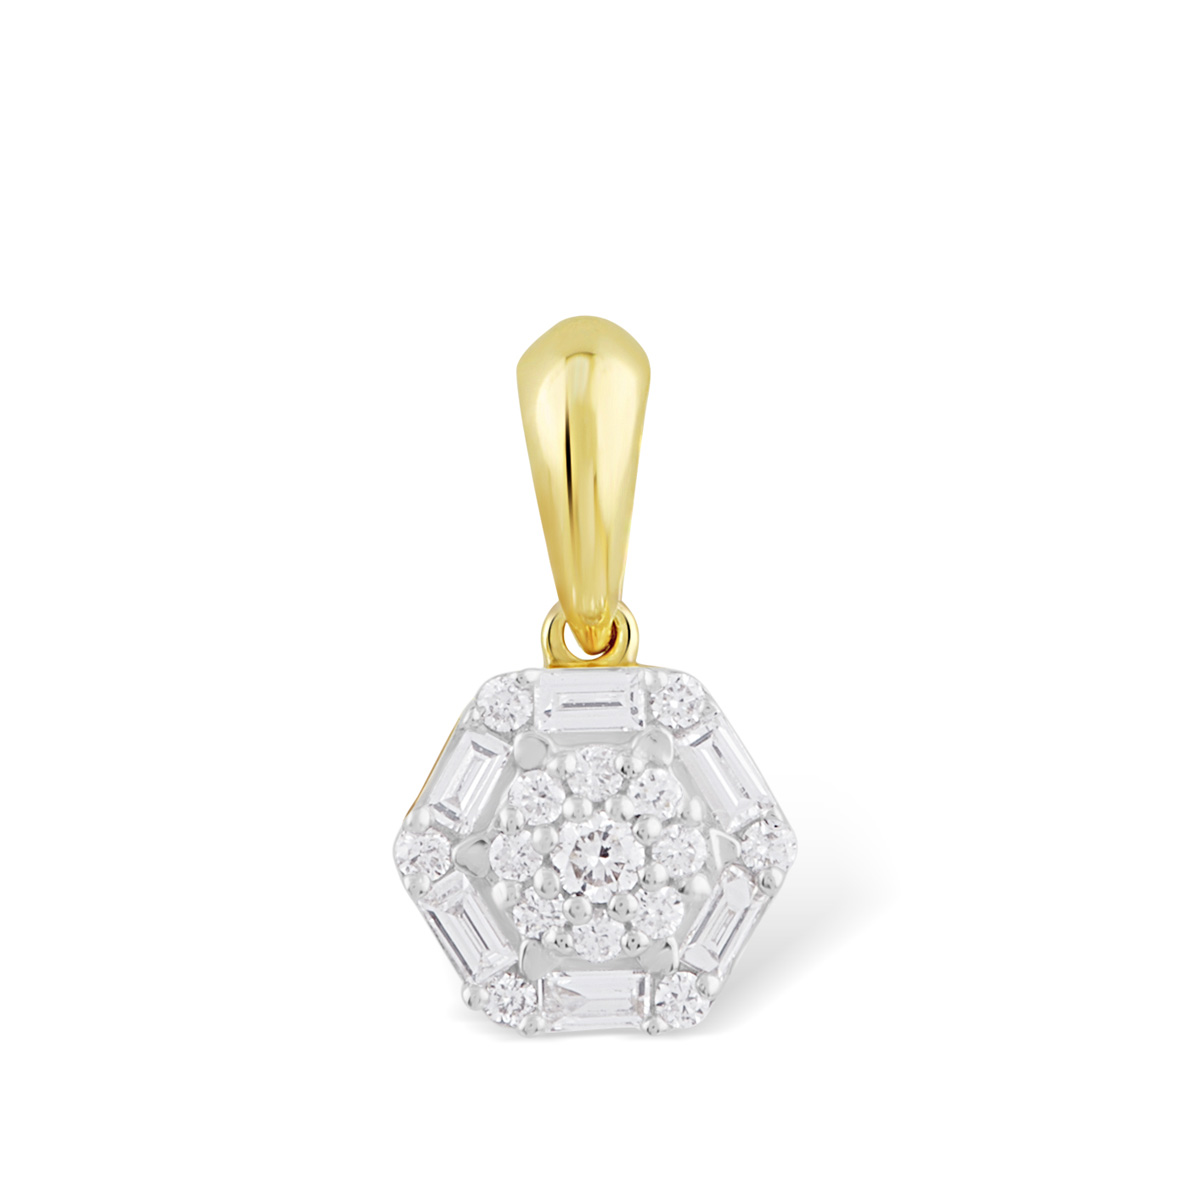 FI52576SWD4YP
14k yellow gold diamond pendant